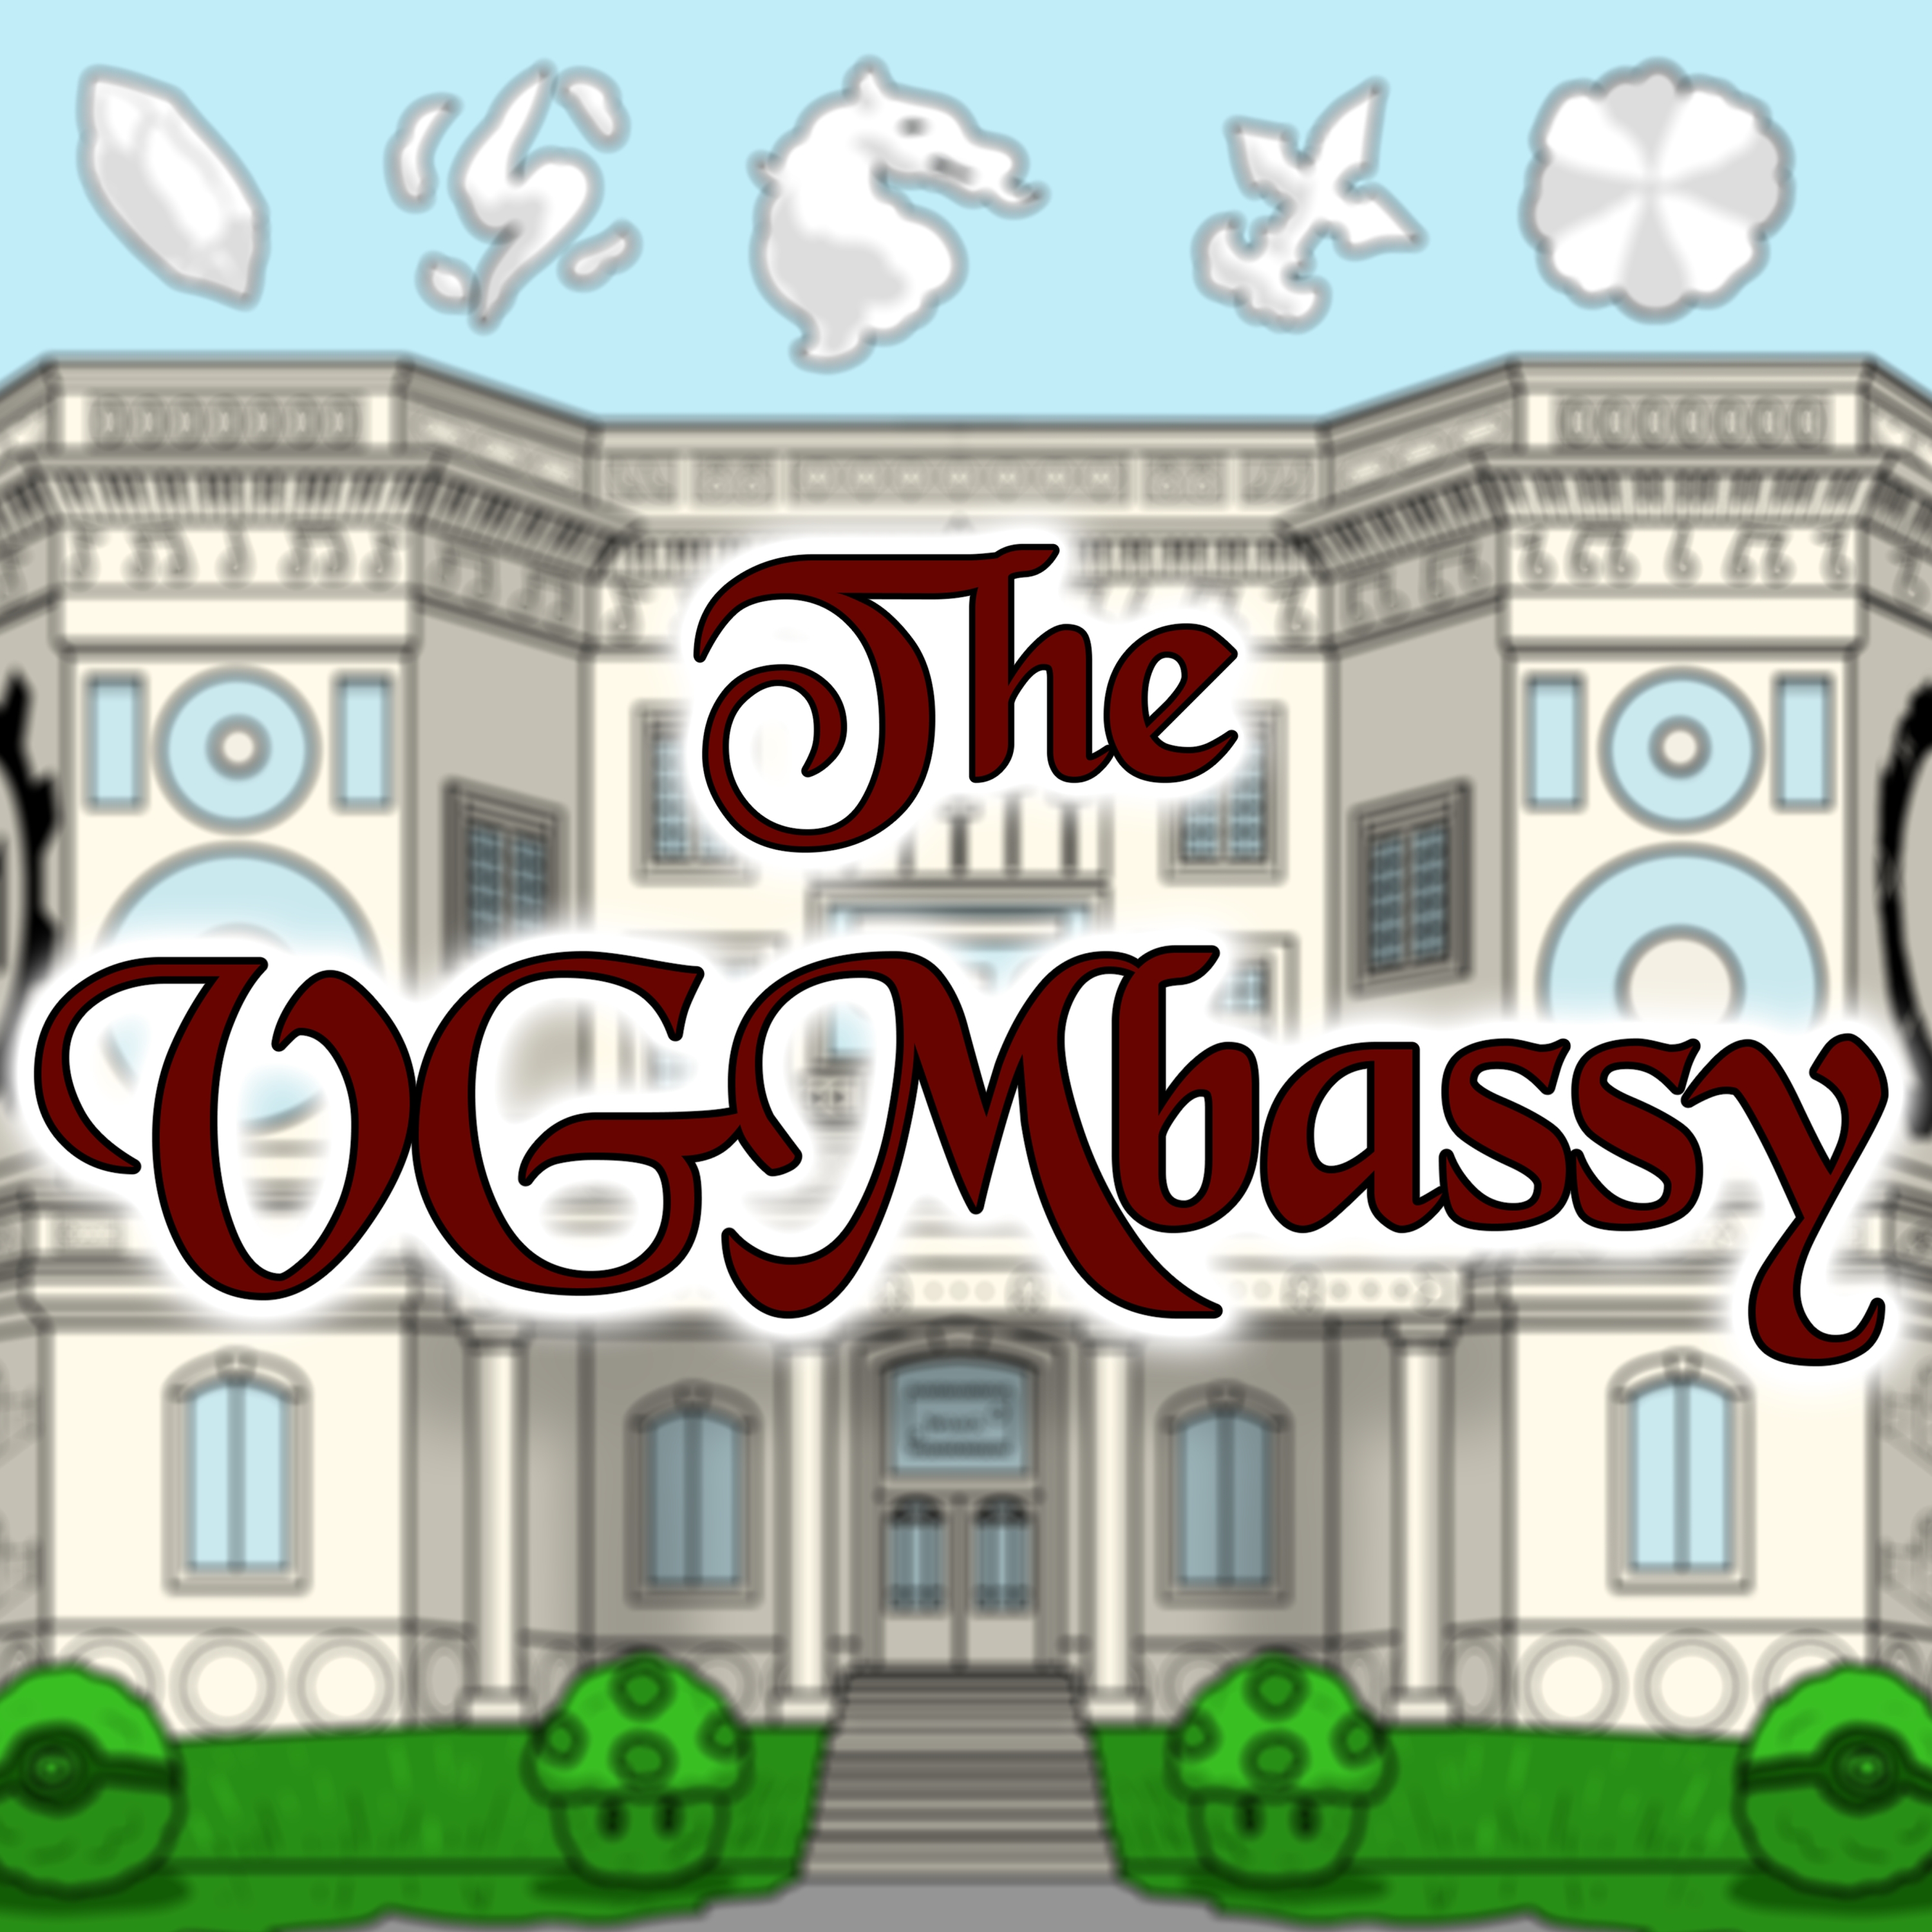 The VGMbassy Podcast artwork